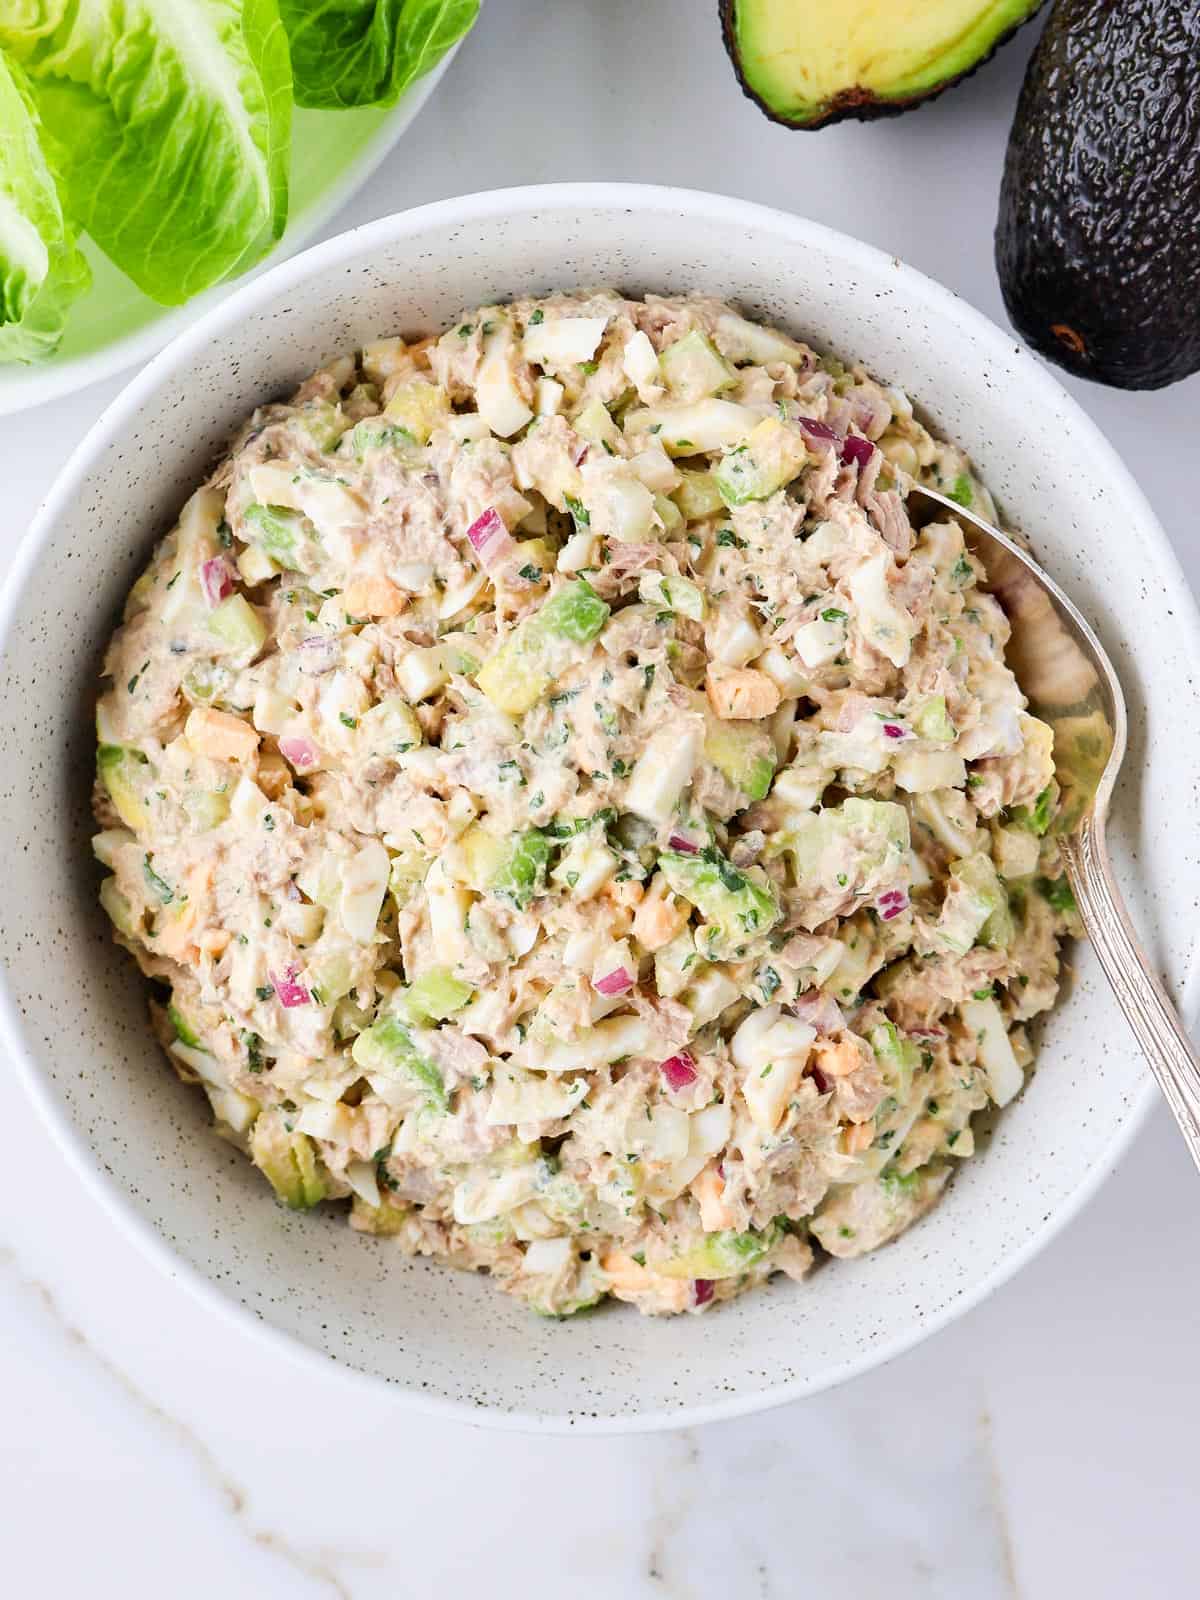 Tuna avocado salad egg salad in bowl with a spoon.